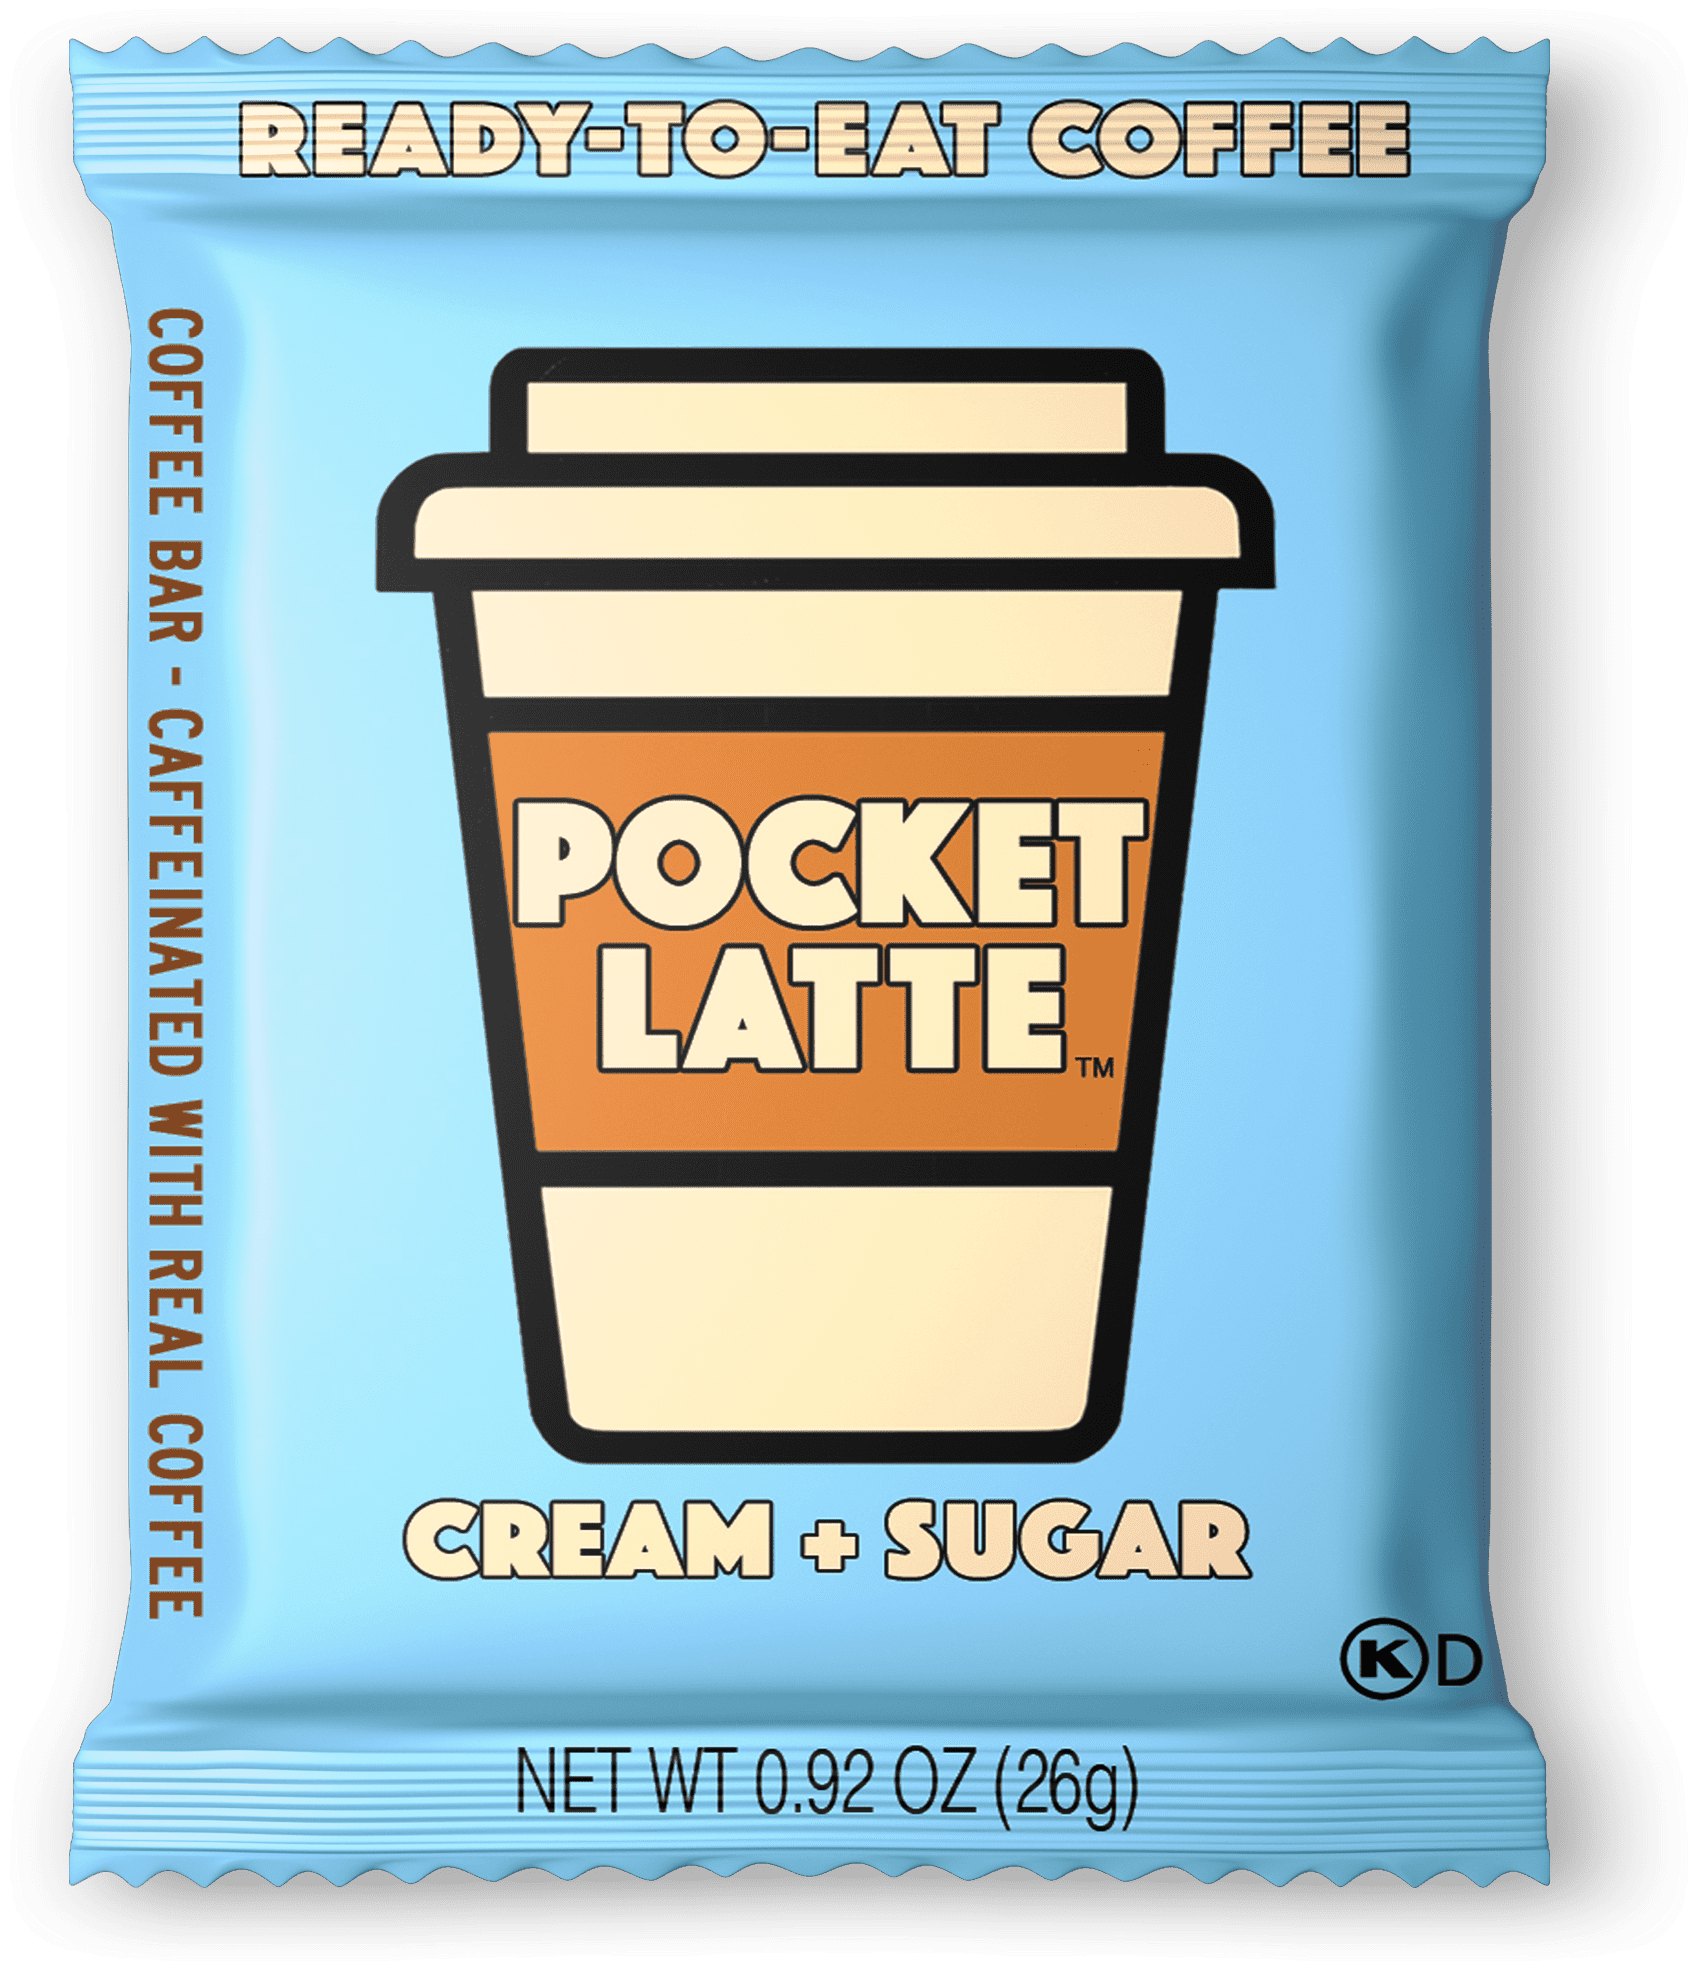 Pocket Latte ''Cream + Sugar'' Coffee Bar 8 innerpacks per case